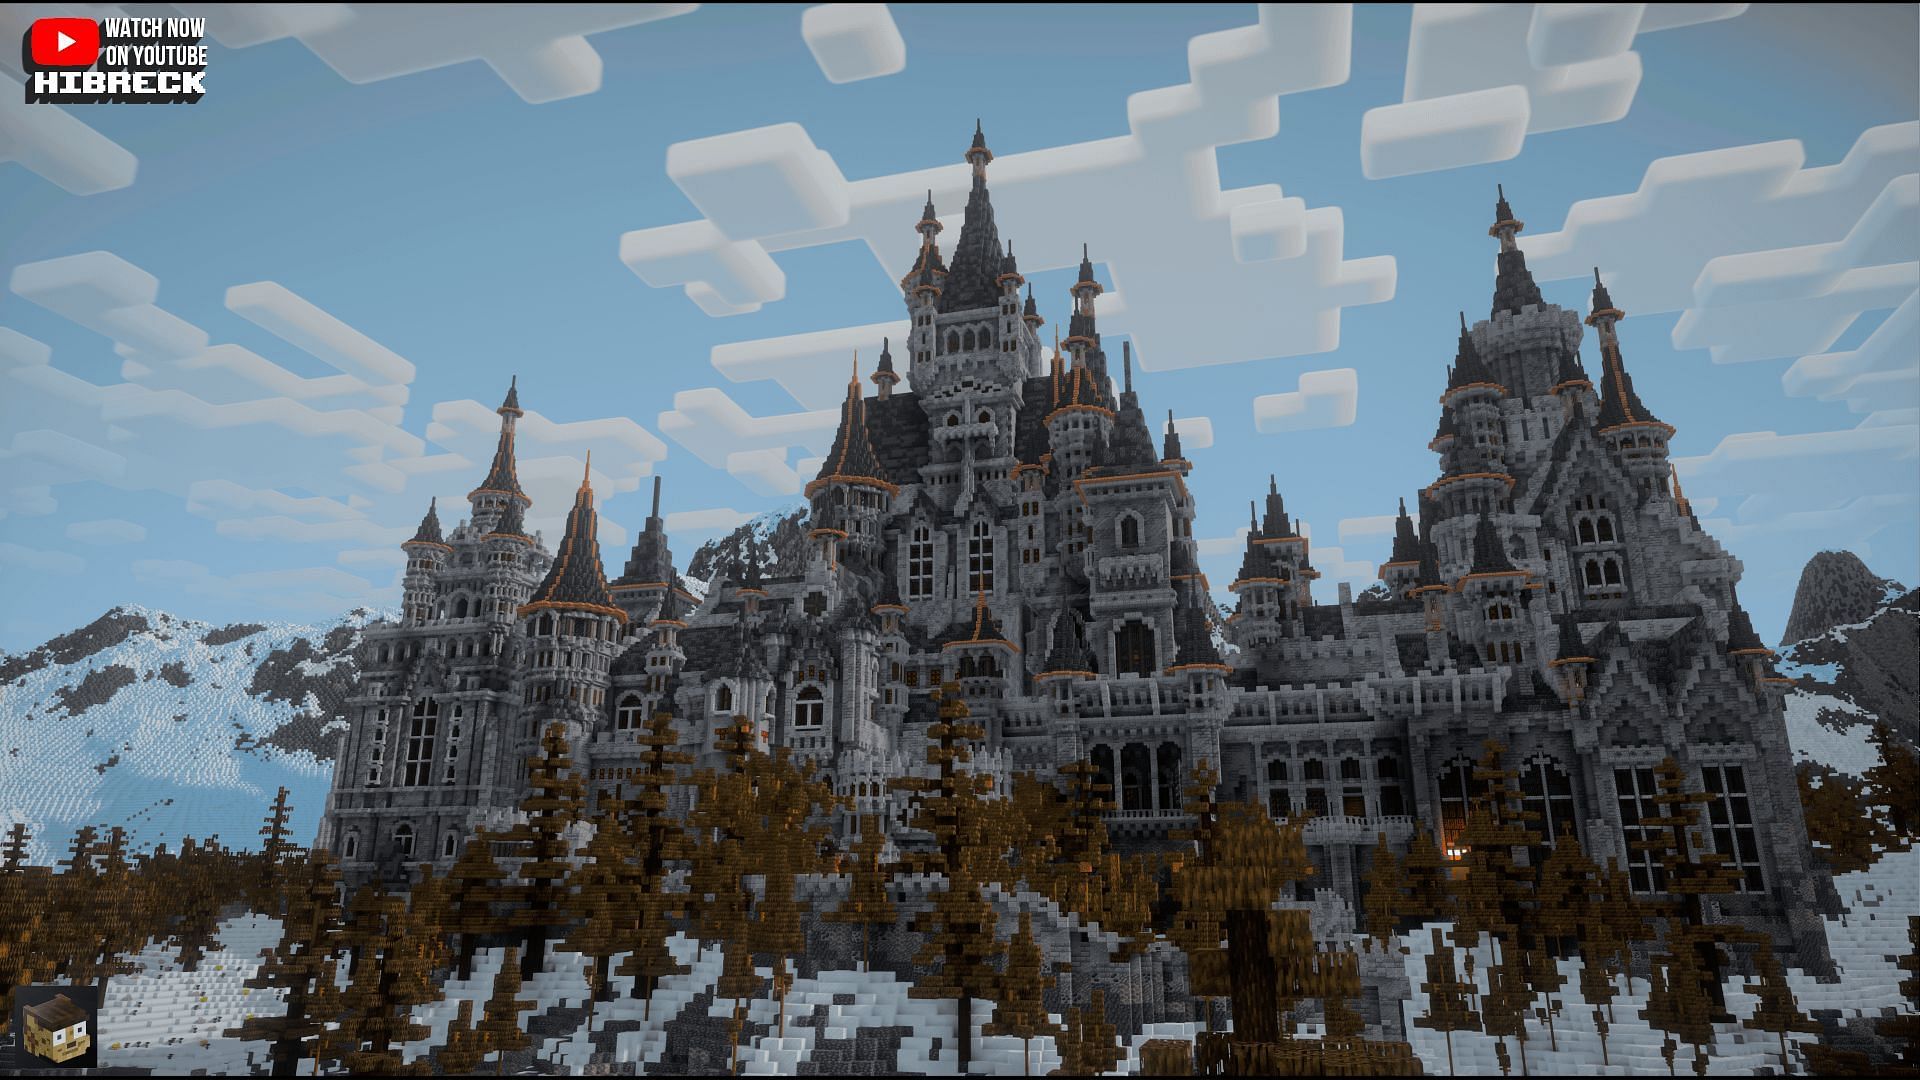 The Dimitrescu Castle from Resident Evil Villlage in Minecraft (Image via Reddit by u/hibreck)